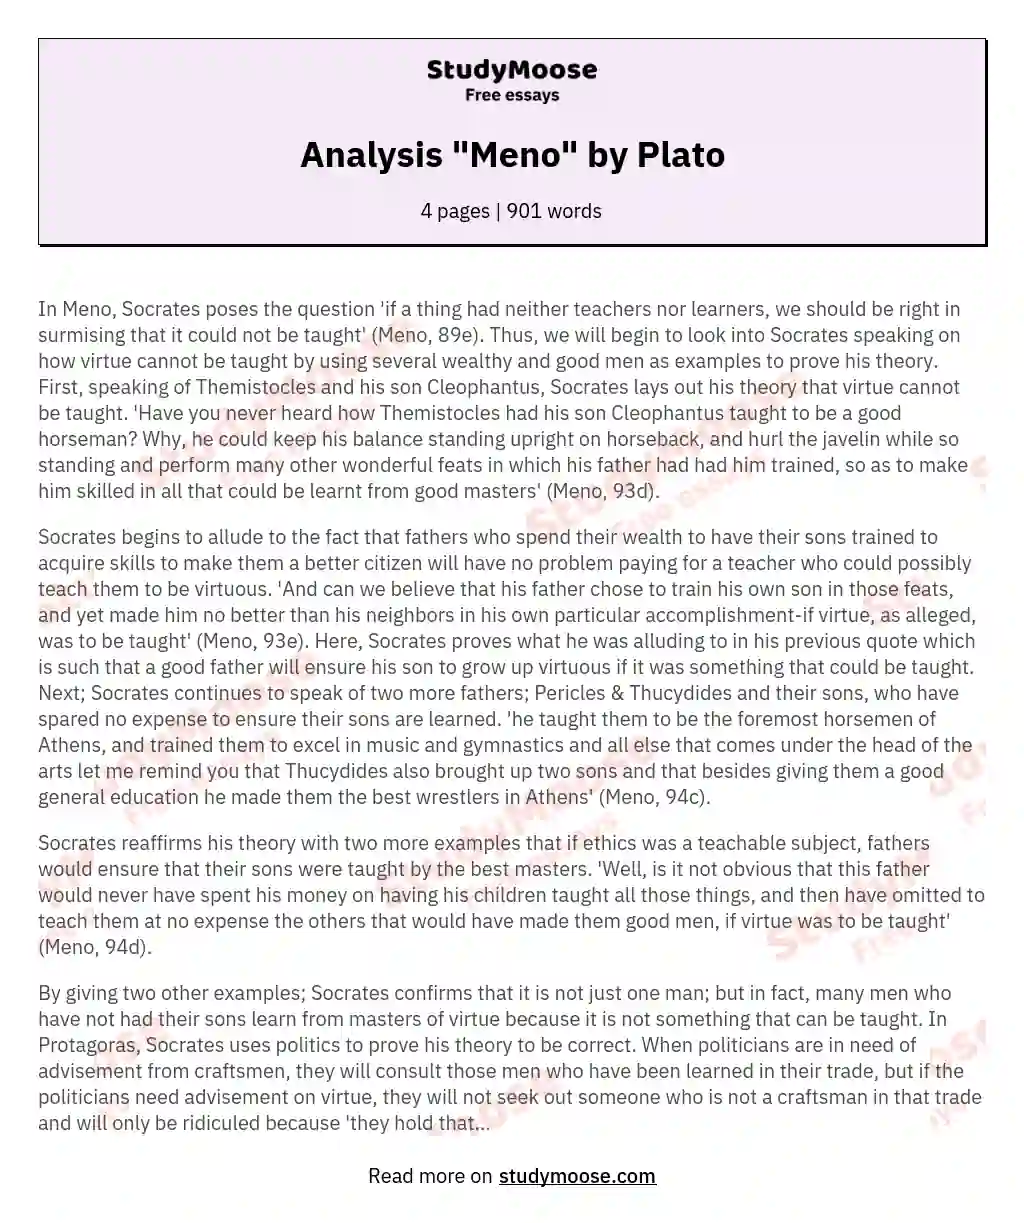 Analysis "Meno" by Plato essay